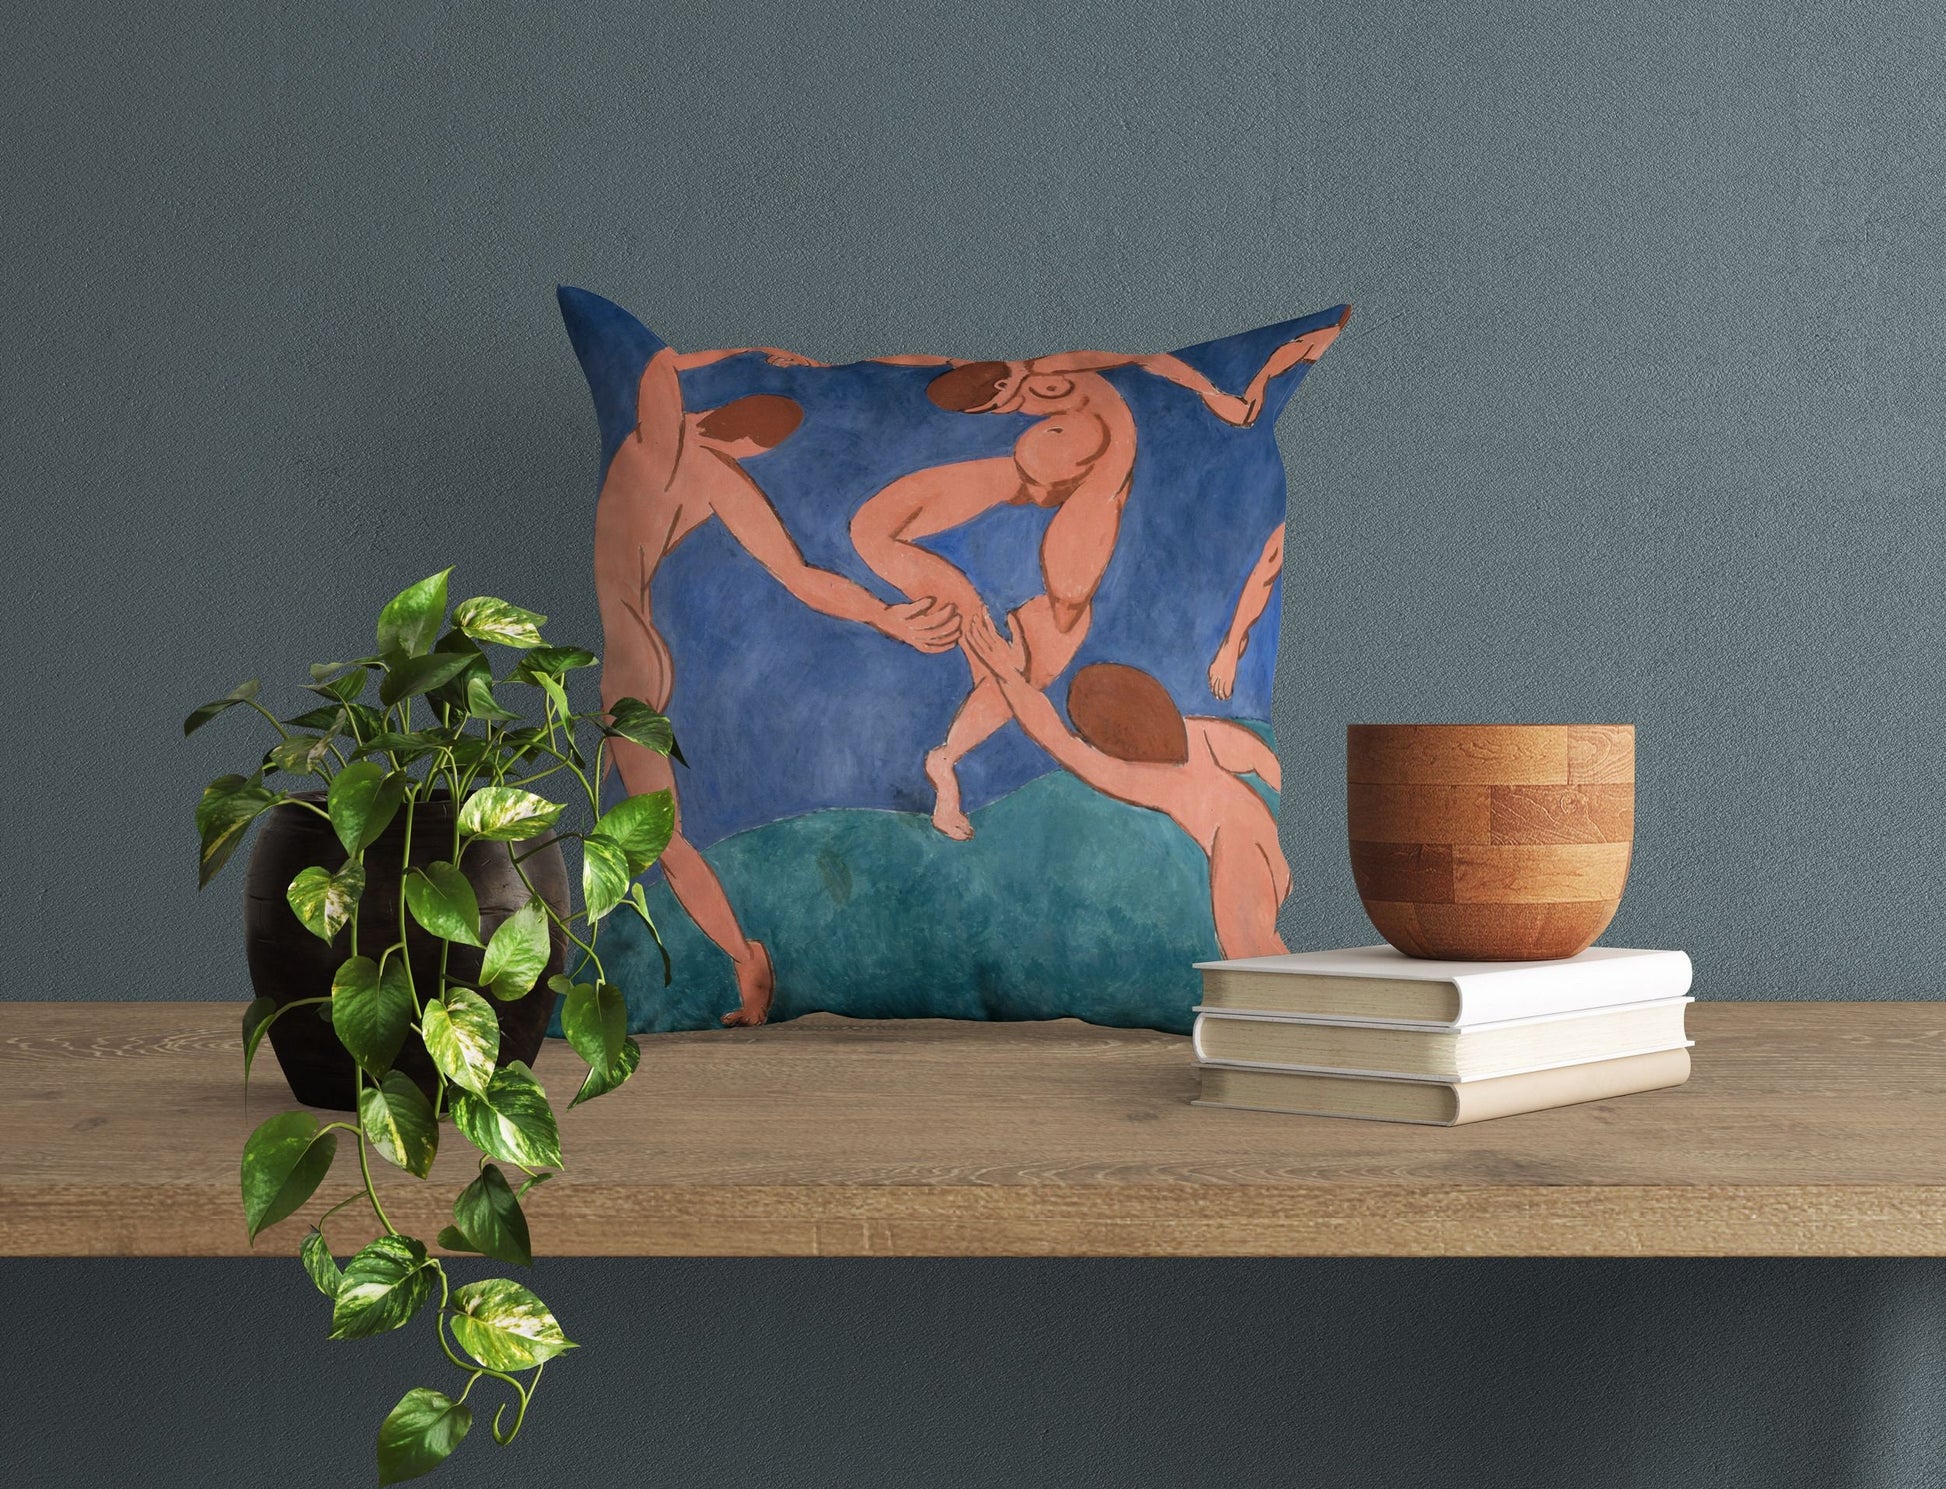 Henri Matisse Famous Art, Throw Pillow, Abstract Pillow, Soft Pillow Cases, Colorful Pillow Case, Modern Pillow, Large Pillow Cases